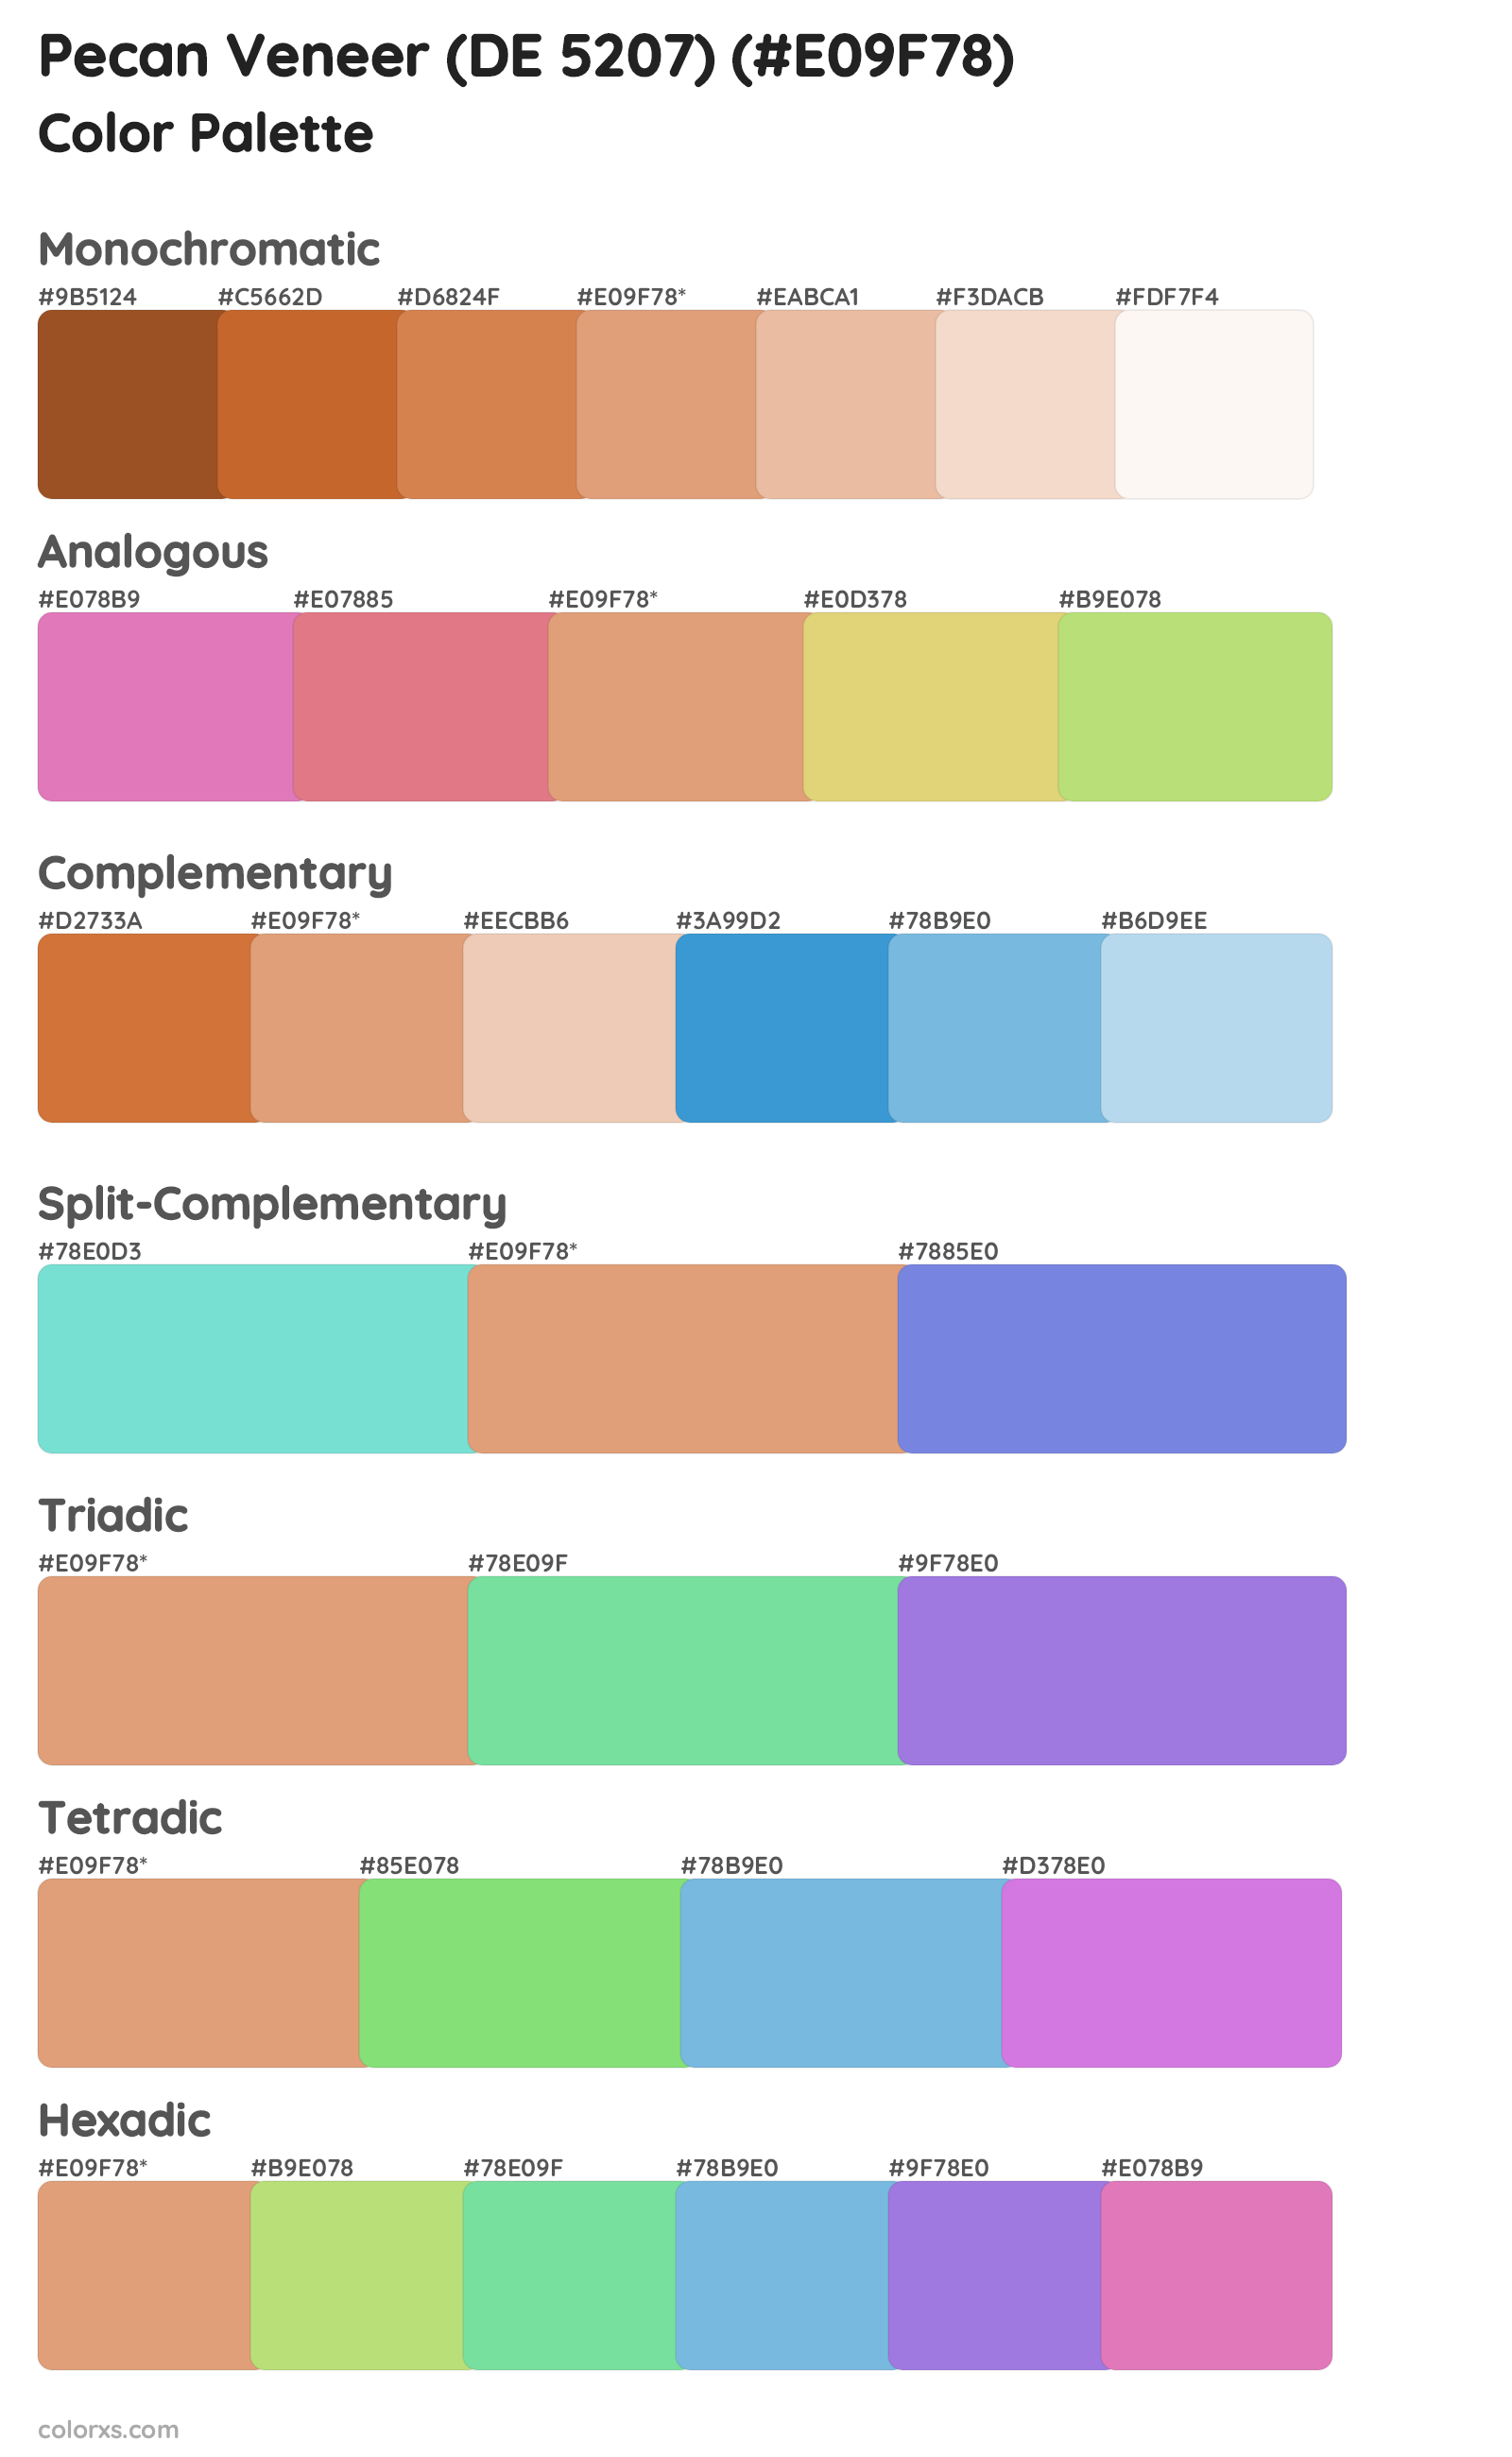 Pecan Veneer (DE 5207) Color Scheme Palettes